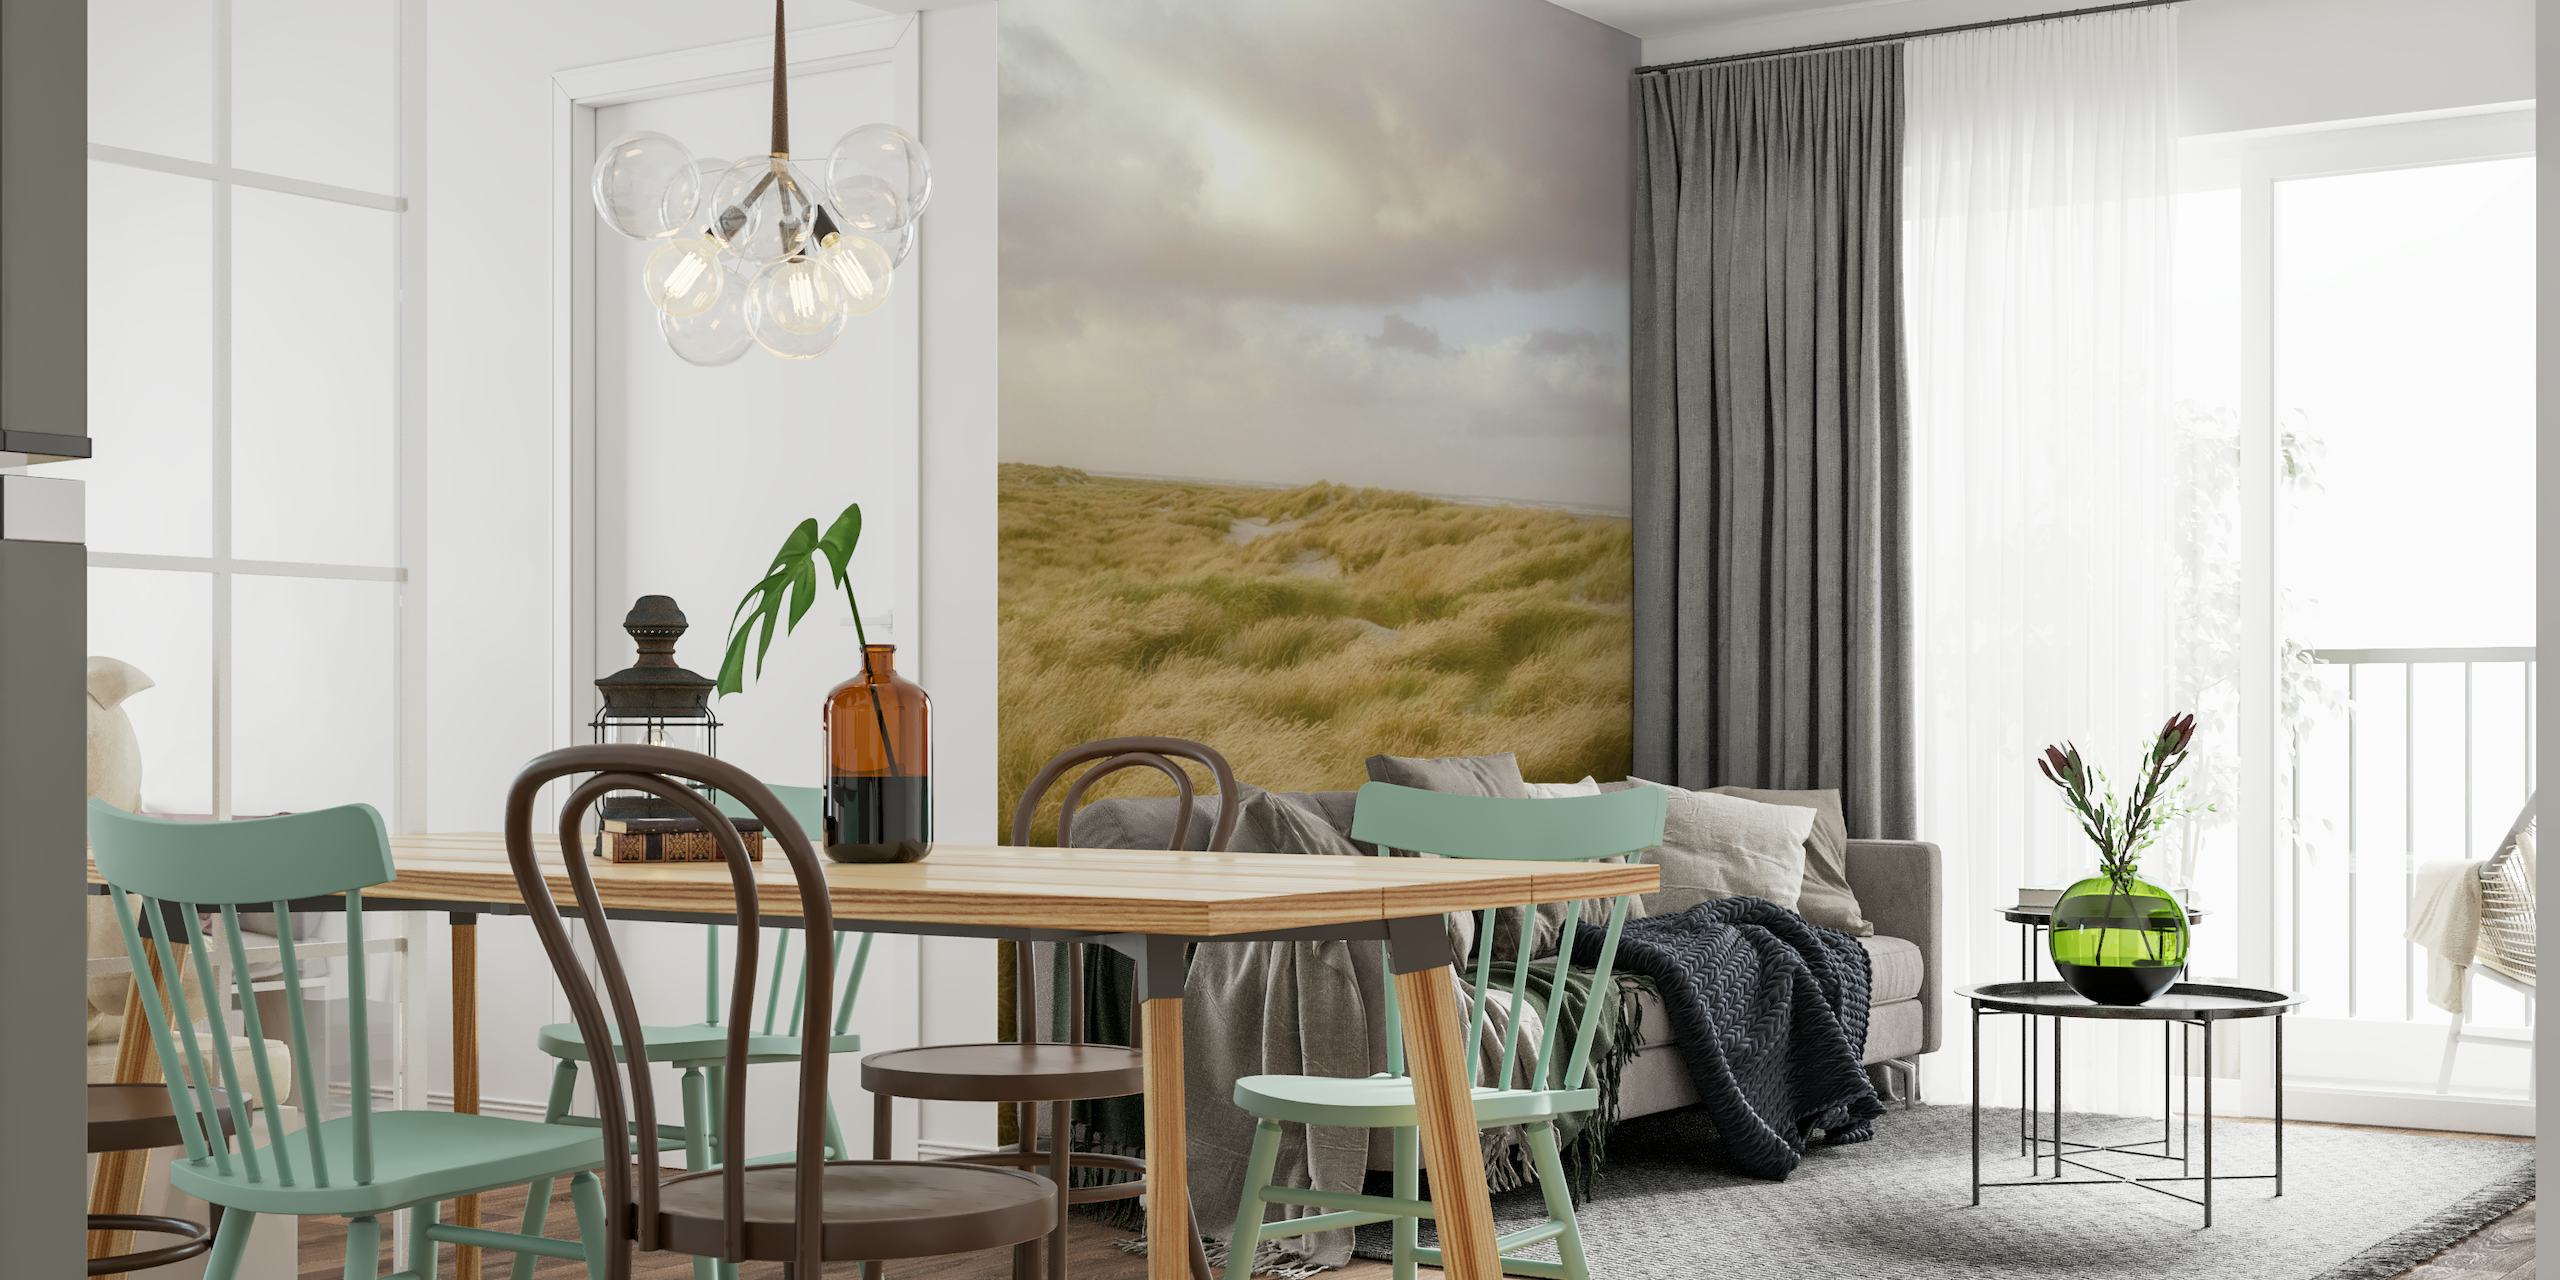 Wall mural depicting the serene sand dunes of Skagen with waving marram grass under an overcast sky.